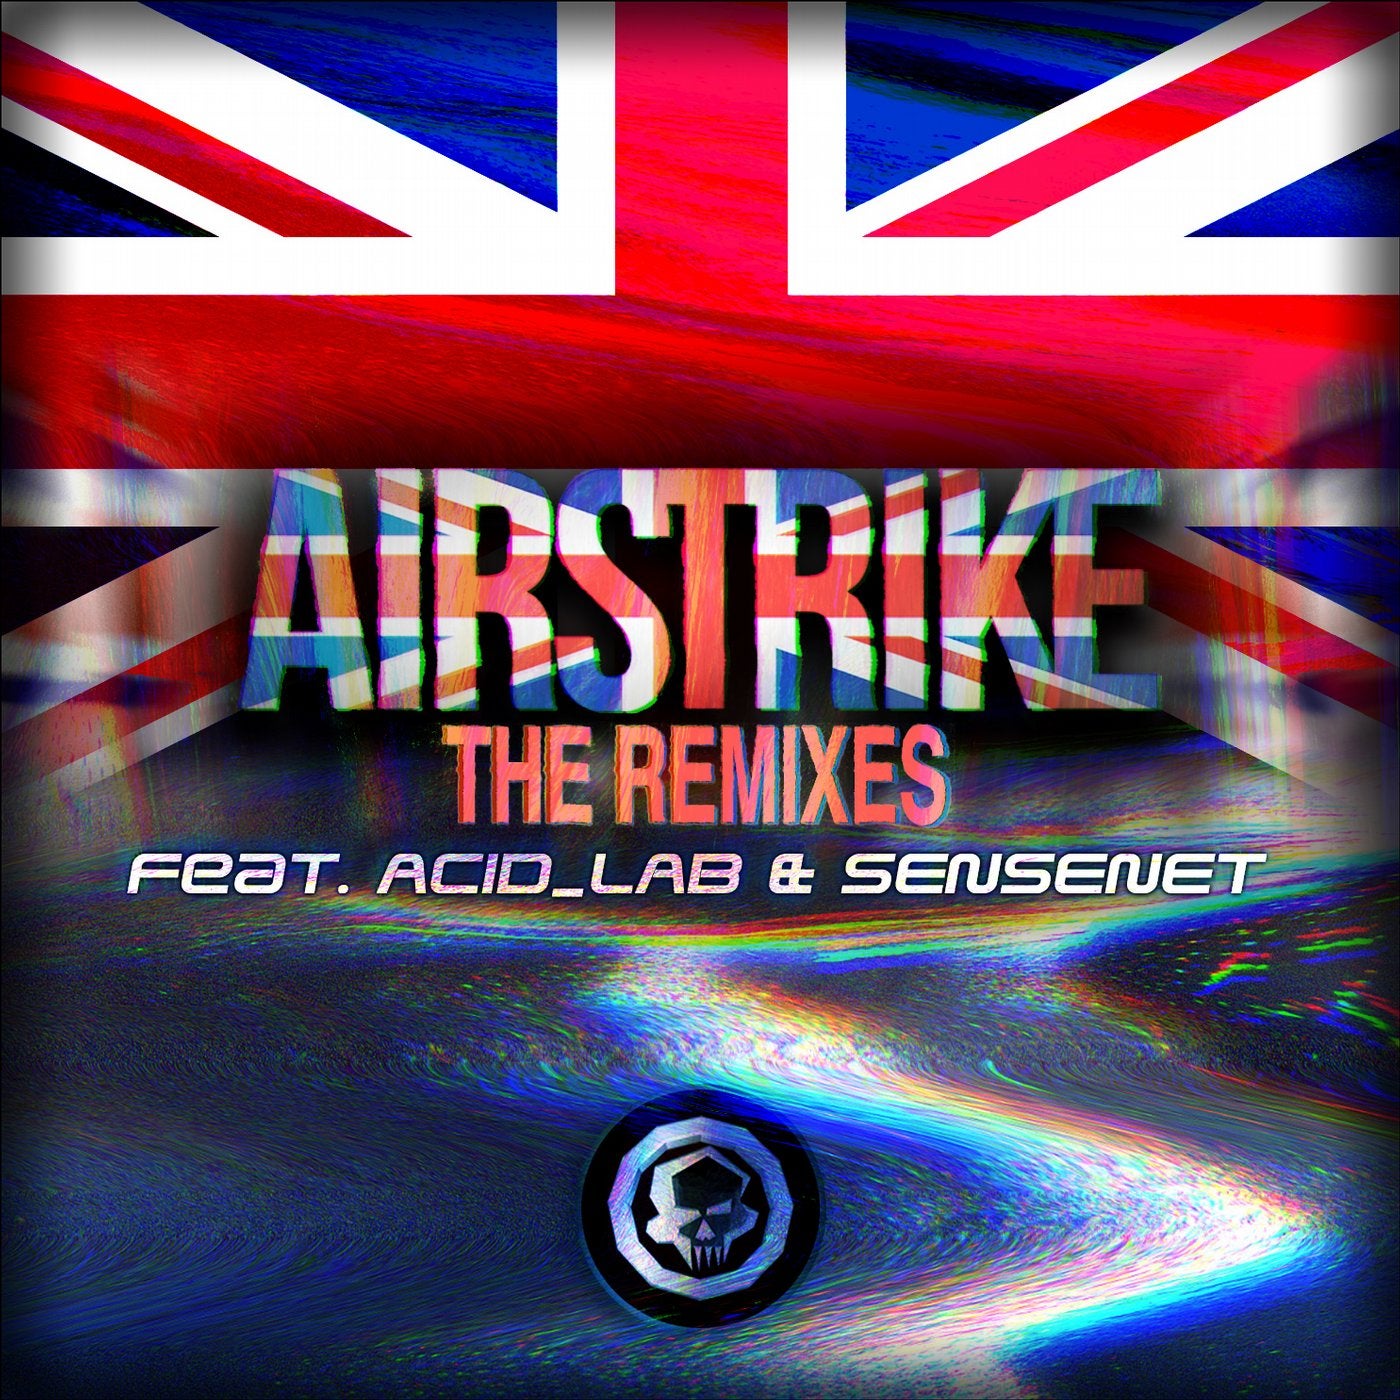 Airstrike - The Remixes